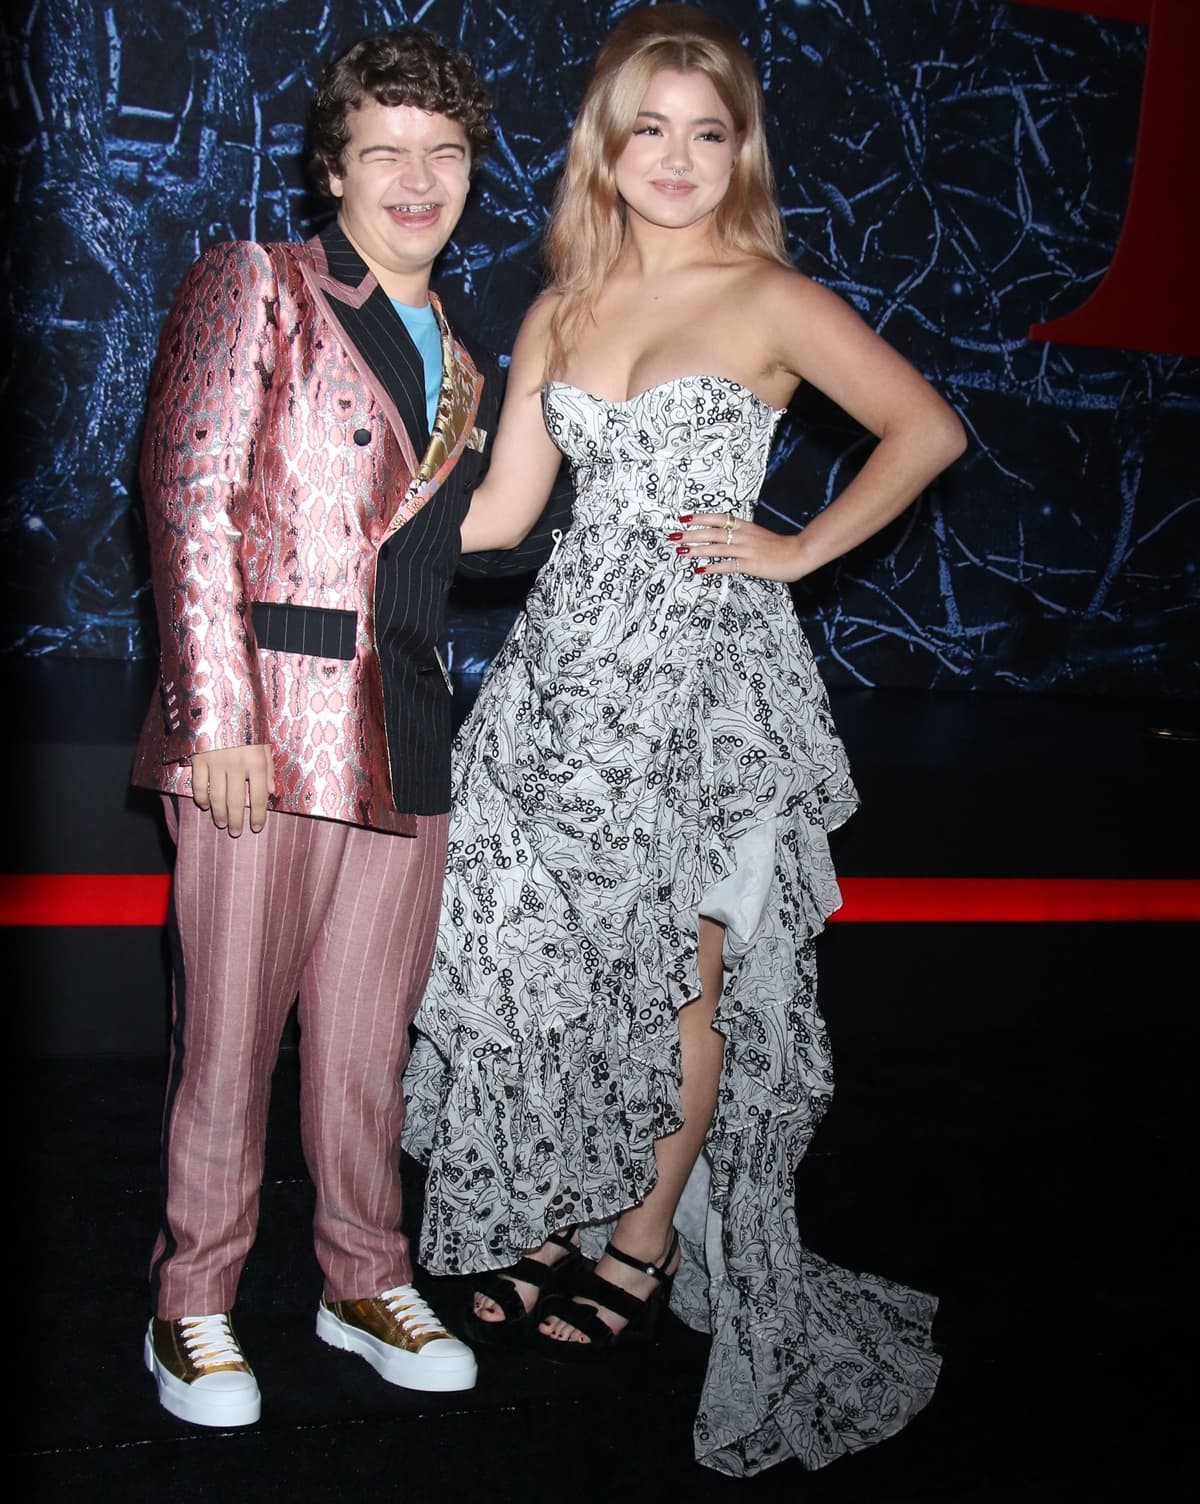 Gaten Matarazzo and his much taller girlfriend, Elizabeth Yu, at Netflix's "Stranger Things" Season 4 New York Premiere